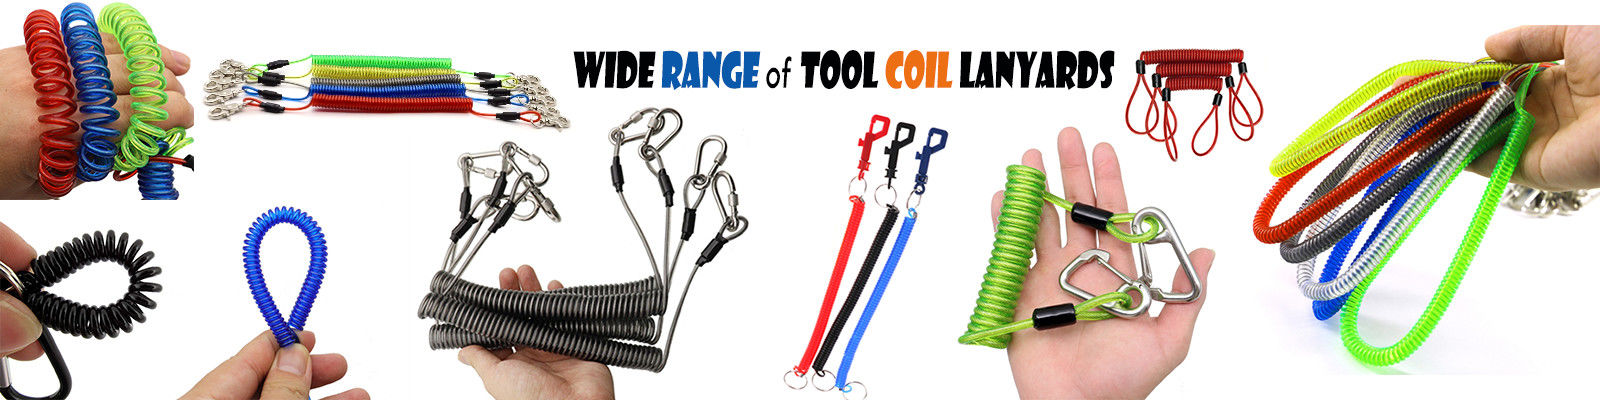 Coil Tool Lanyard